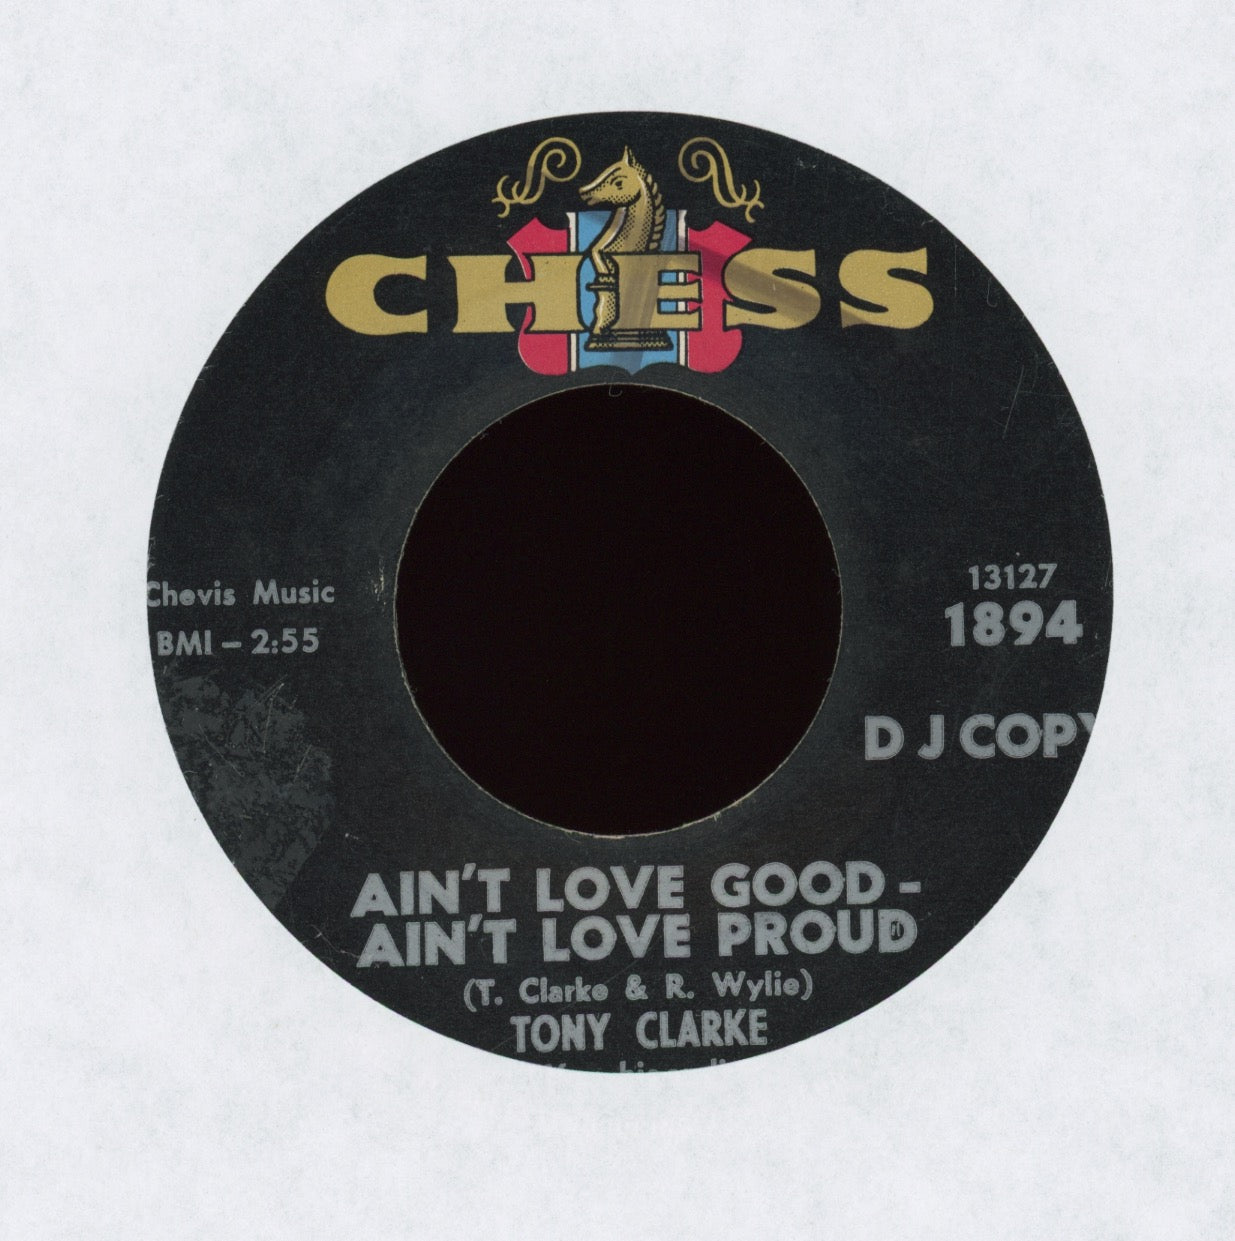 Tony Clarke - Ain't Love Good - Ain't Love Proud on Chess Promo Northern Soul 45